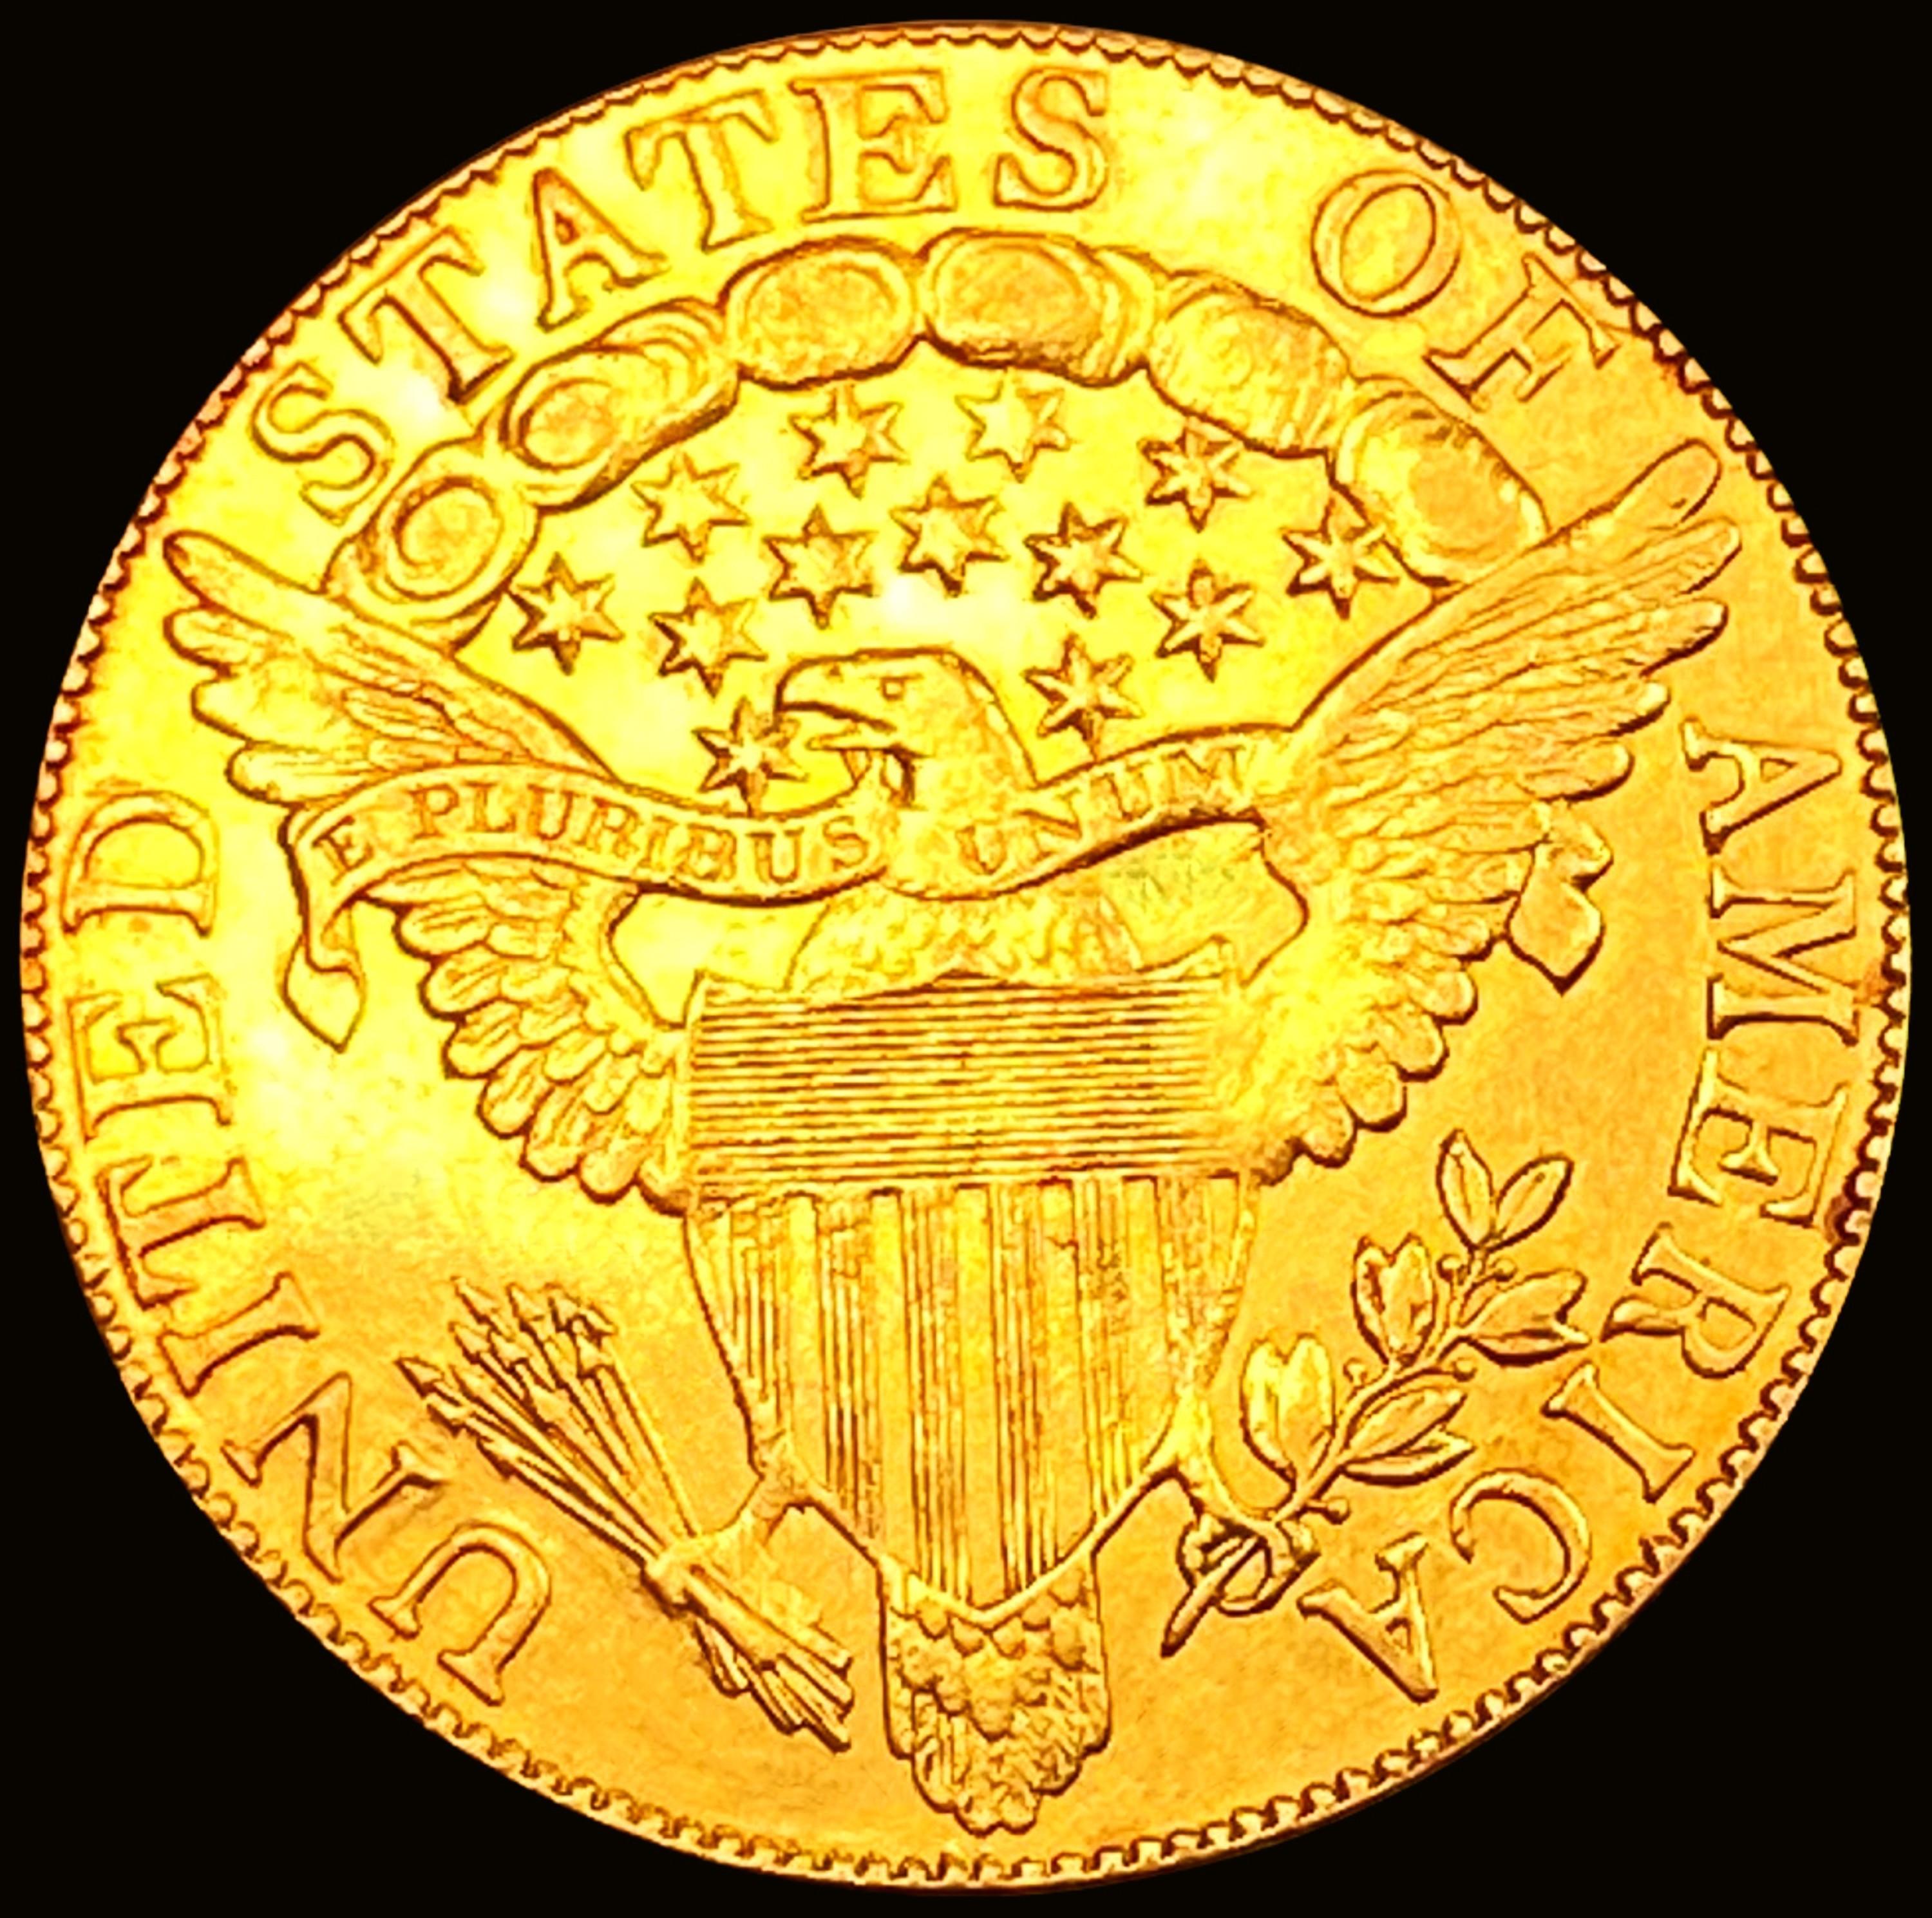 1804 Crosslet 4 BD-1 $10 Gold Eagle UNCIRCULATED